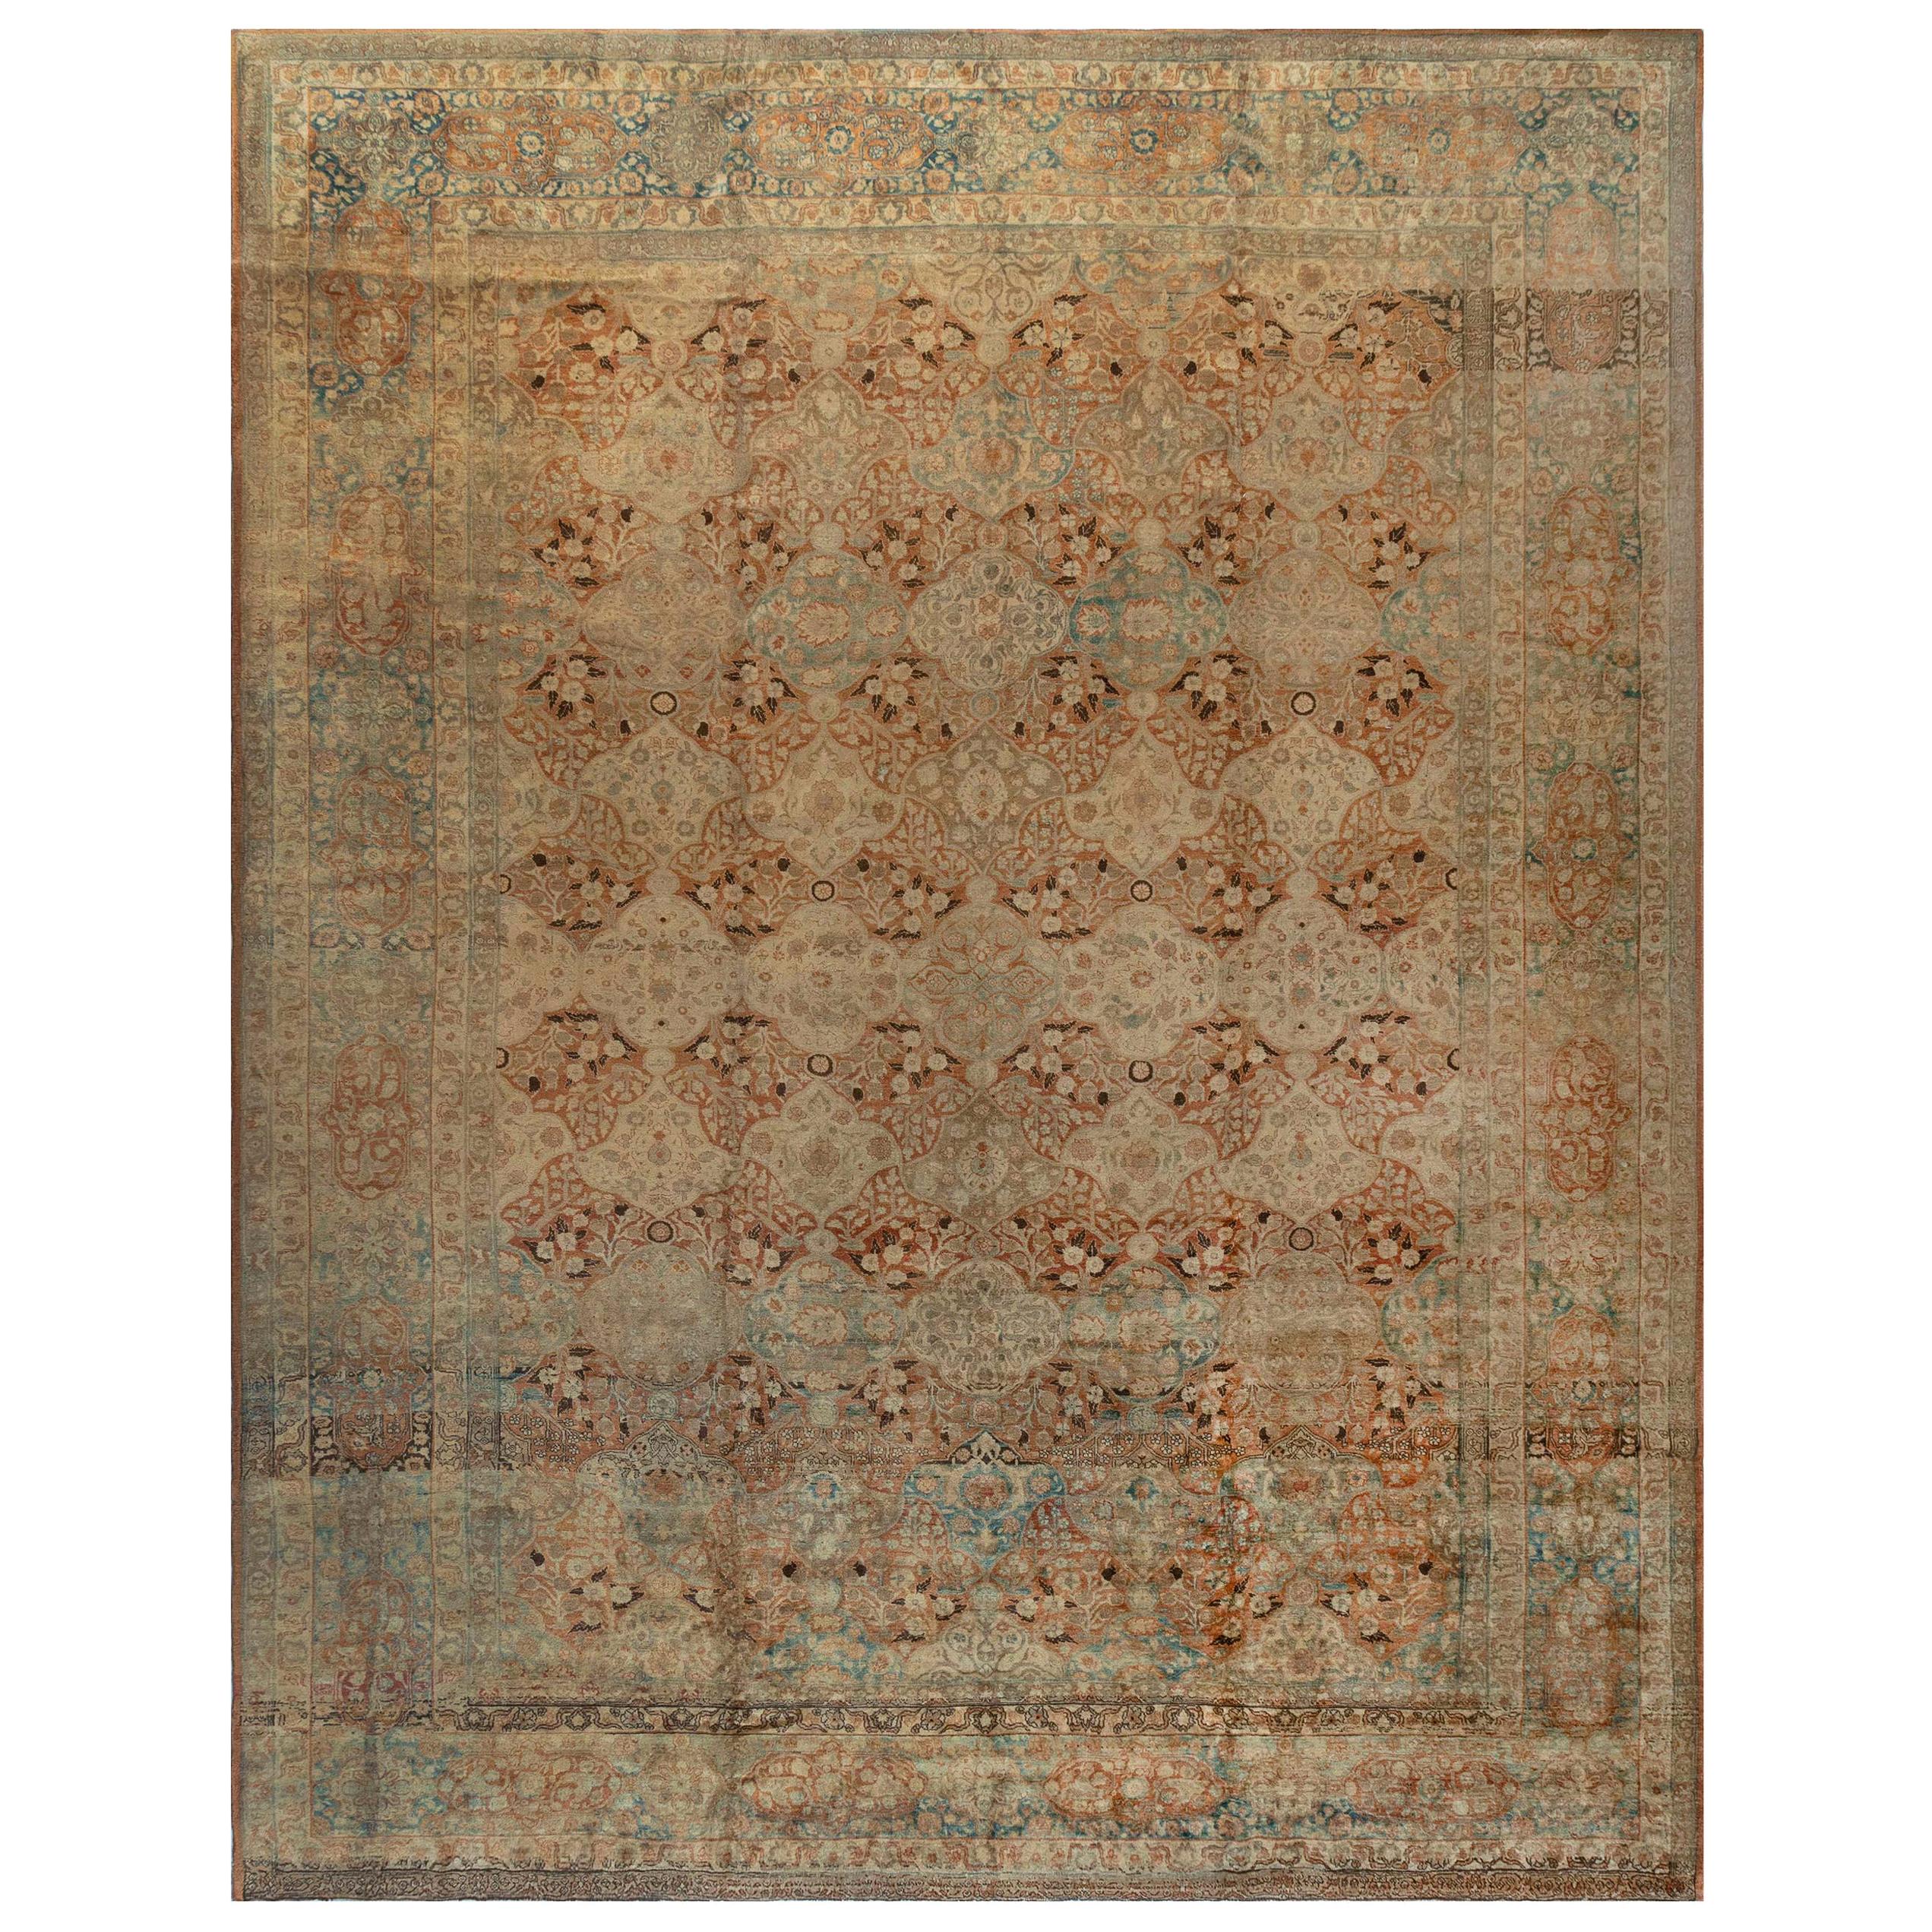 Authentic 19th Century Persian Tabriz Carpet For Sale